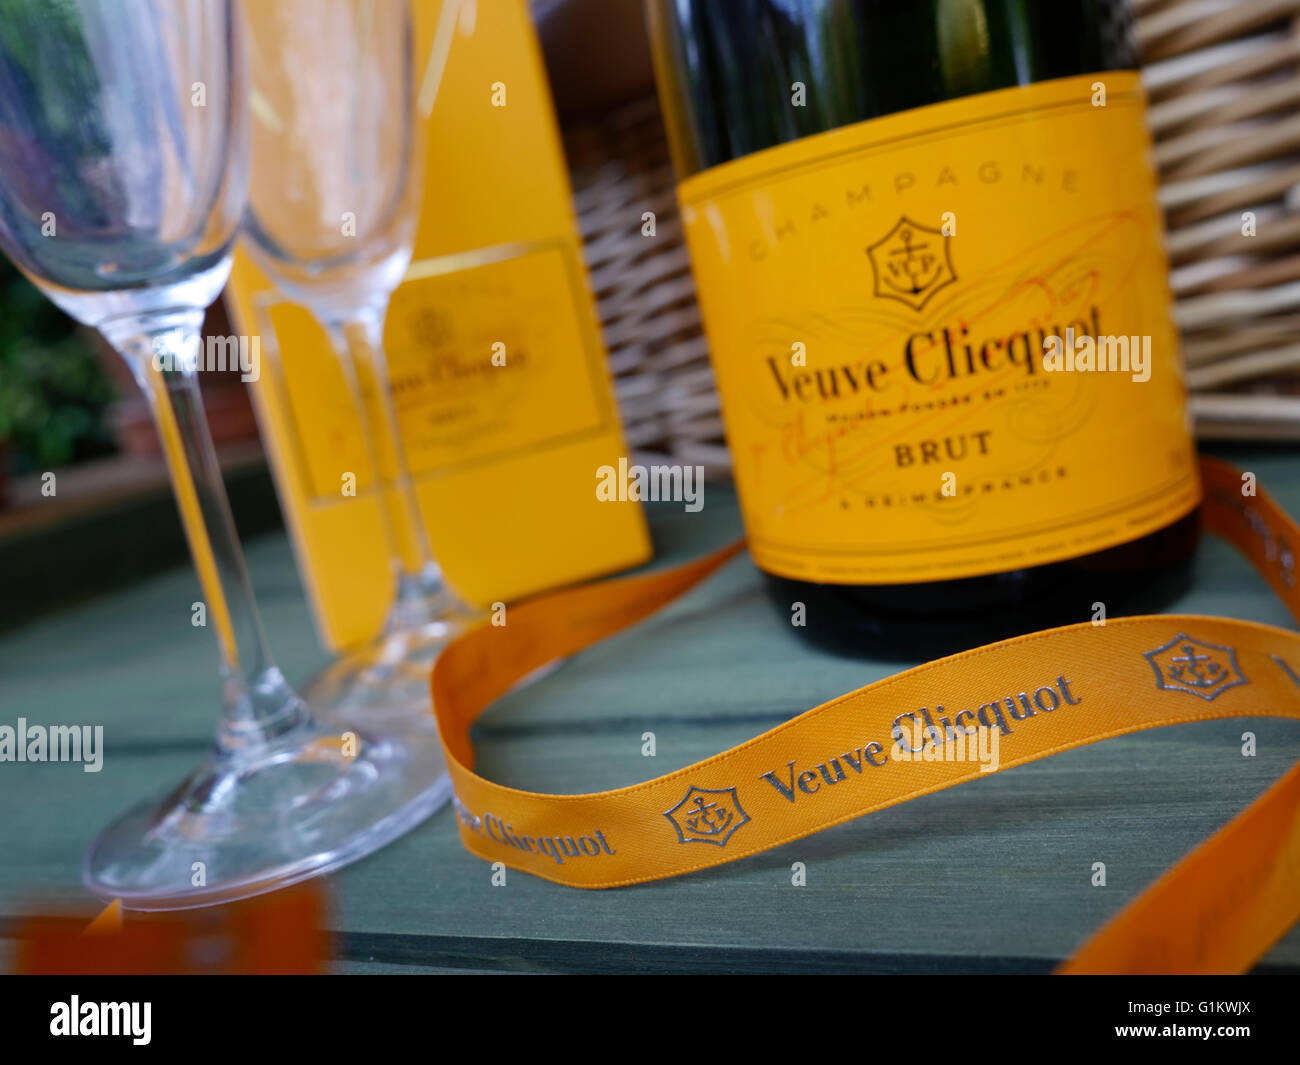 UFA, RUSSIA - JULY 25, 2020: Veuve Clicquot Brut Champagne and Mo